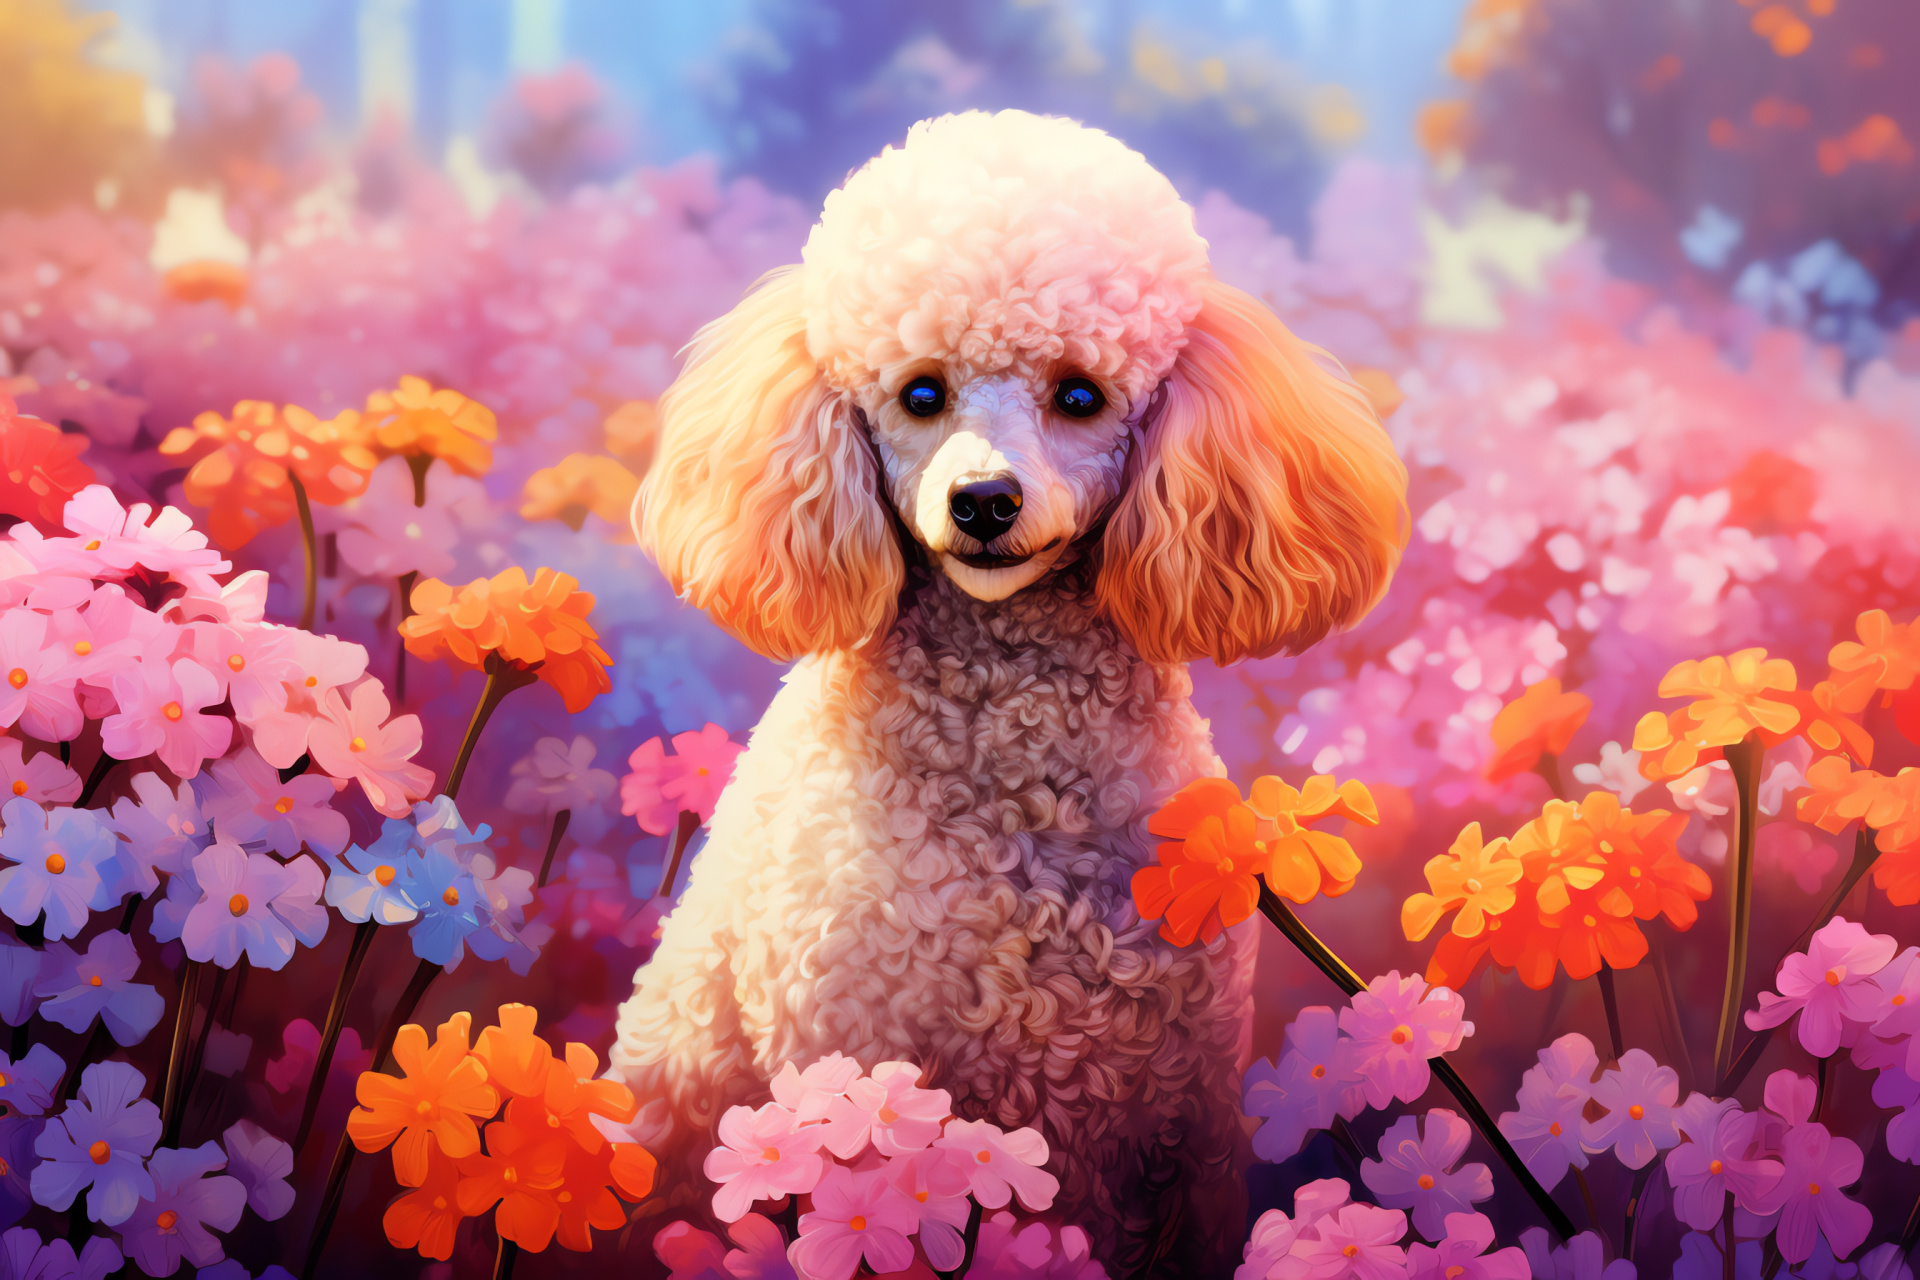 Colorful Poodle, brown-eyed canine, rainbow coat, blooming garden, pastel hues, HD Desktop Image